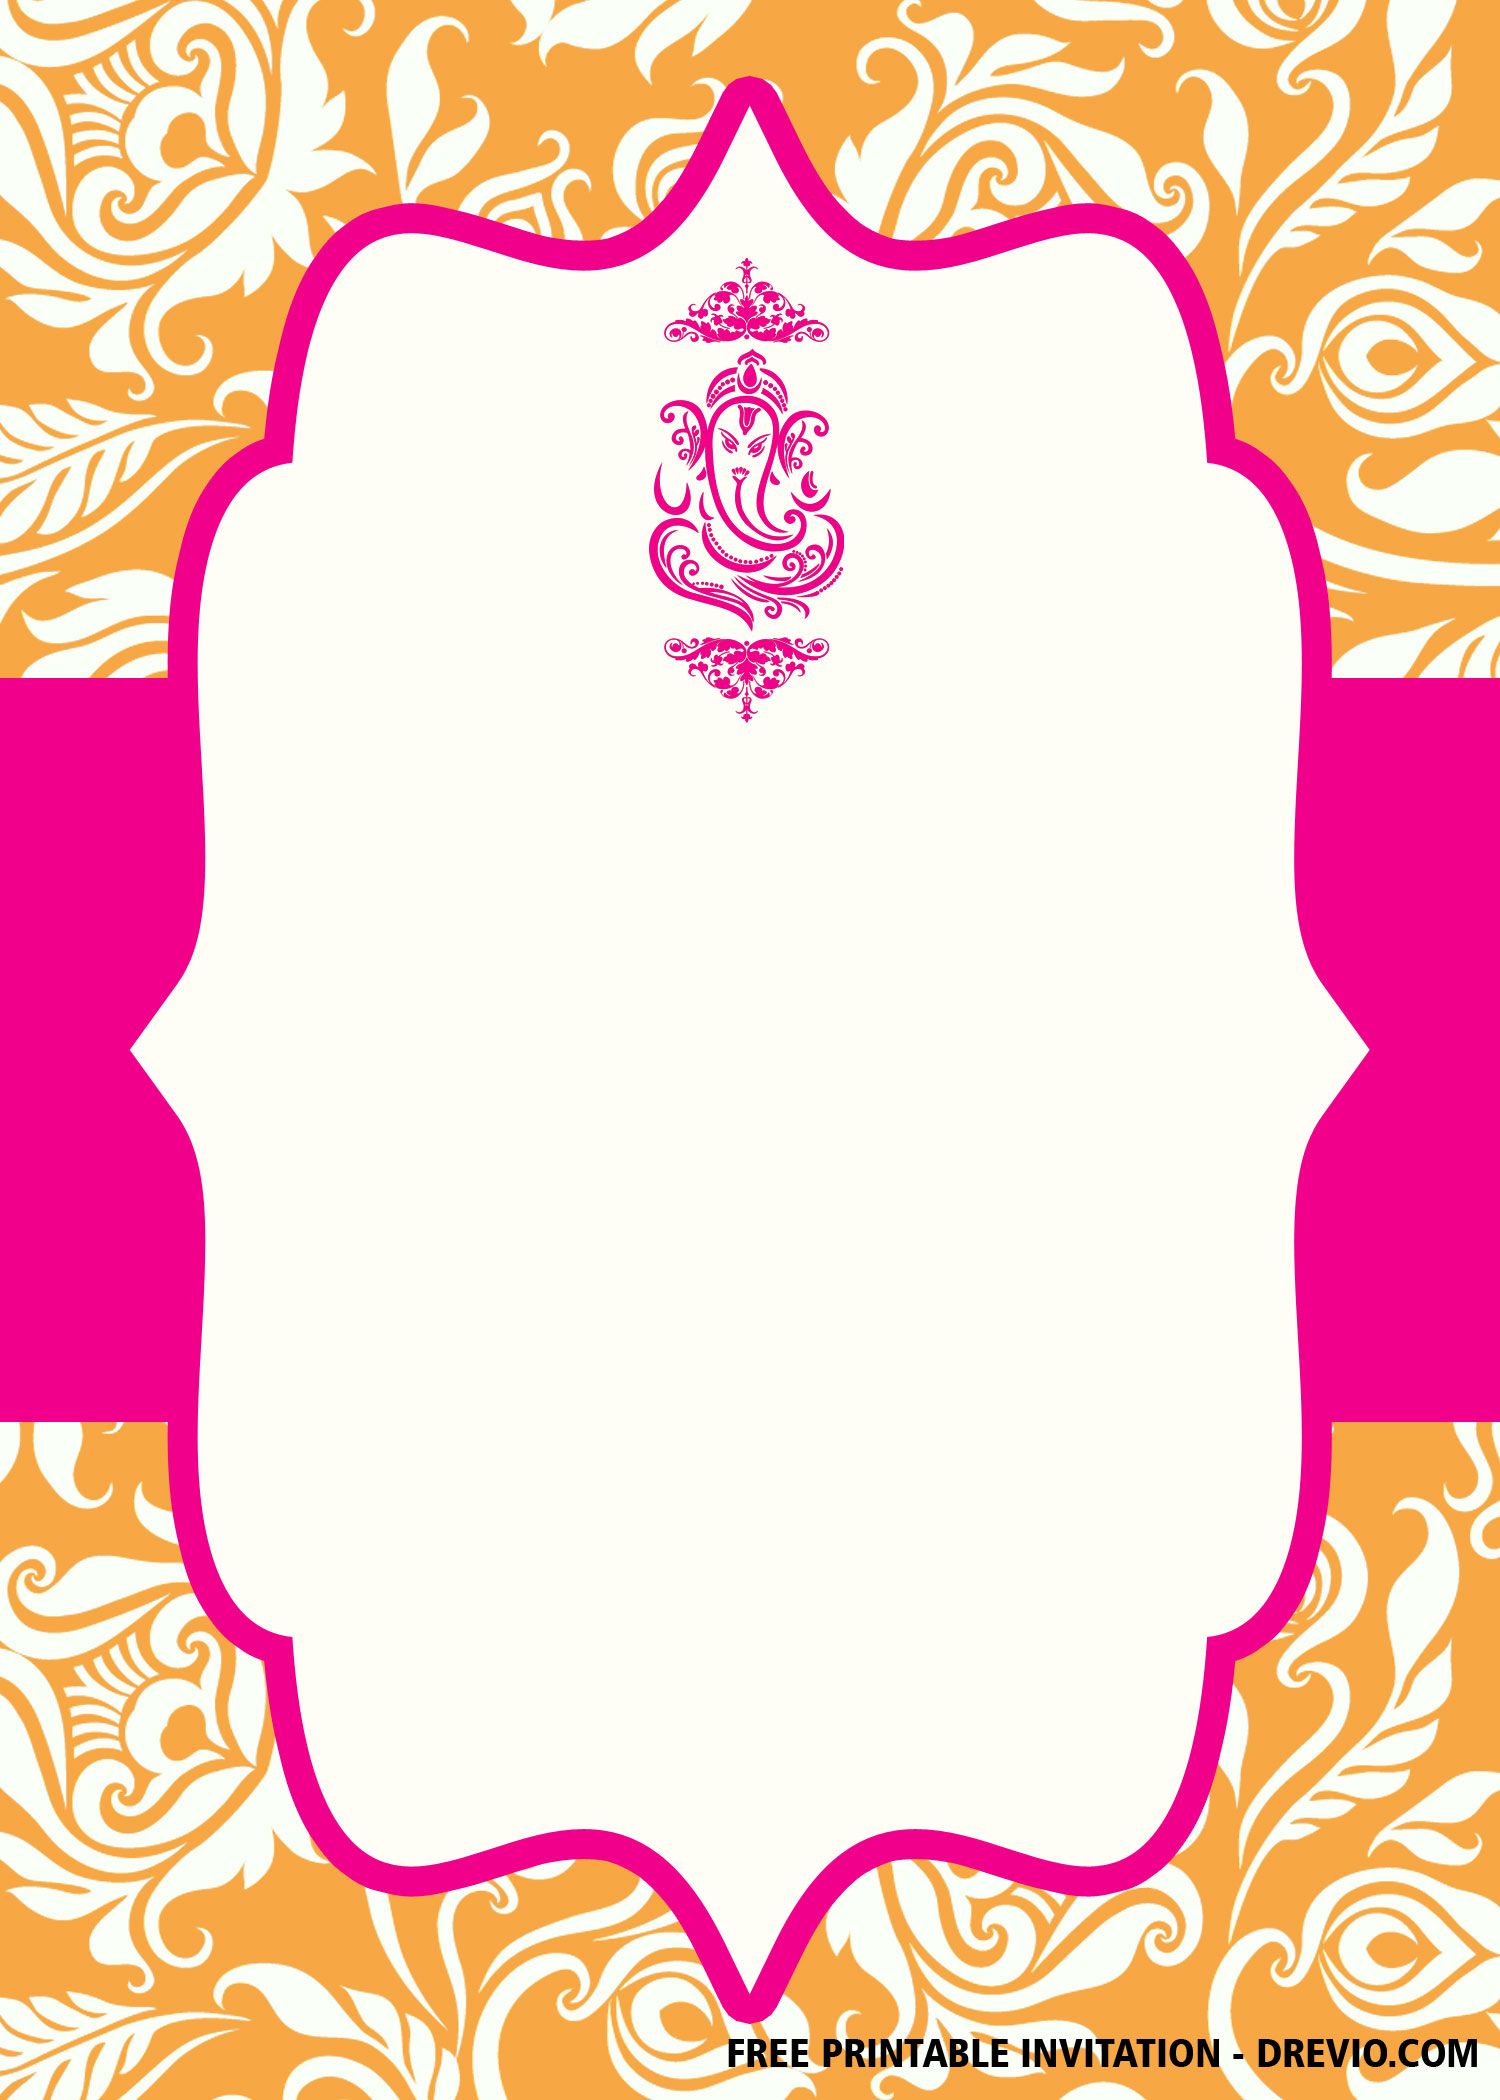 10 Beautiful Royal Invitation Card Backgrounds for an Auspicious Wedding  Invite - myMandap